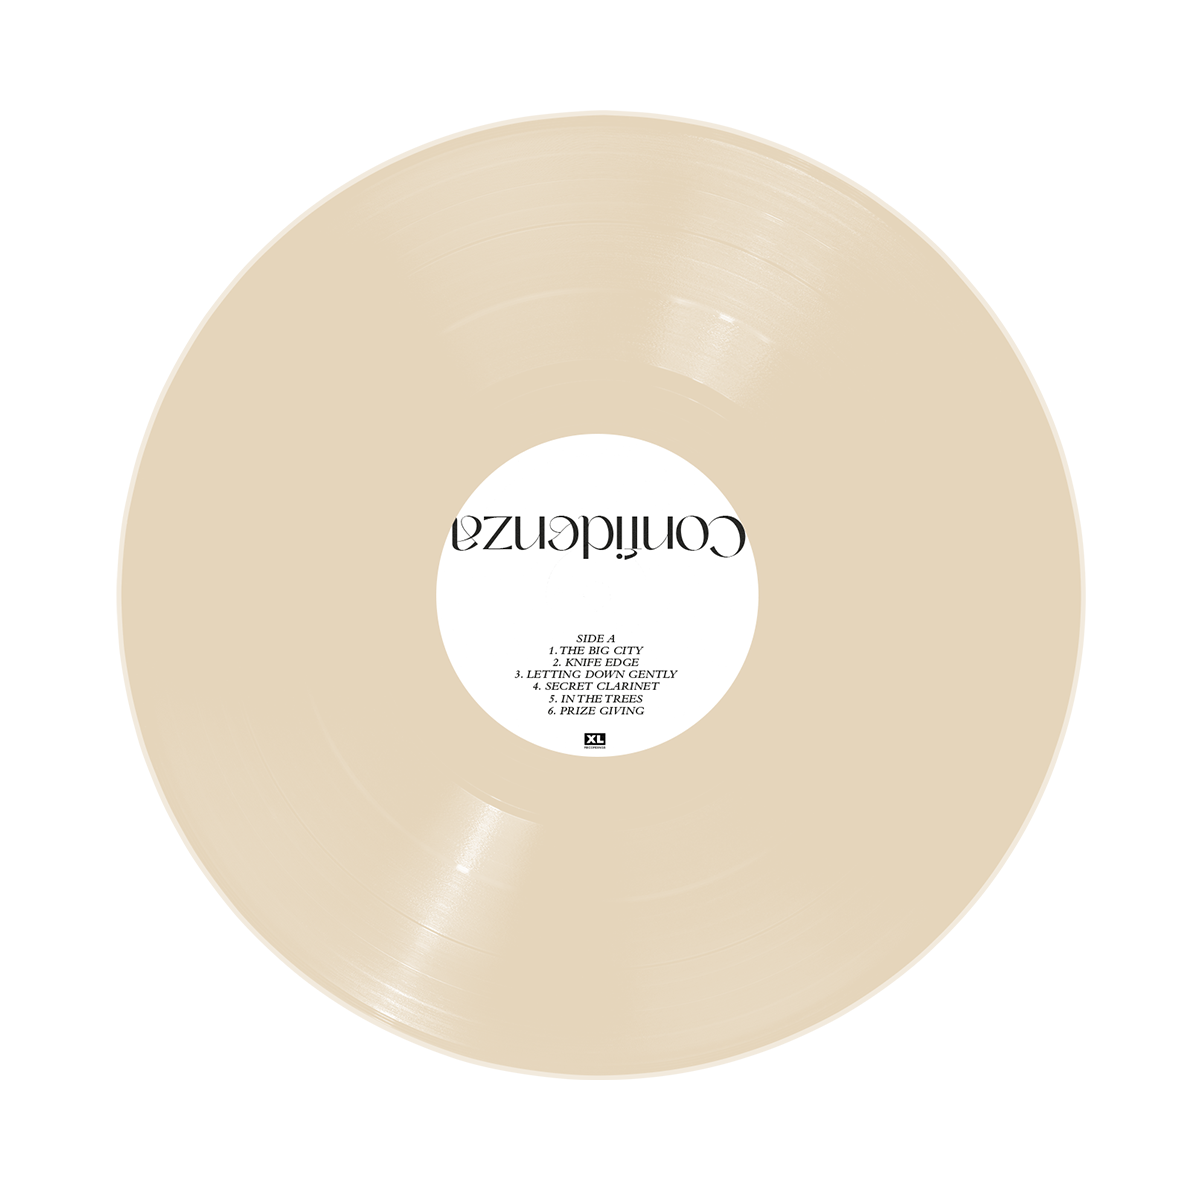 Thom Yorke - Confidenza - Cream Vinyl